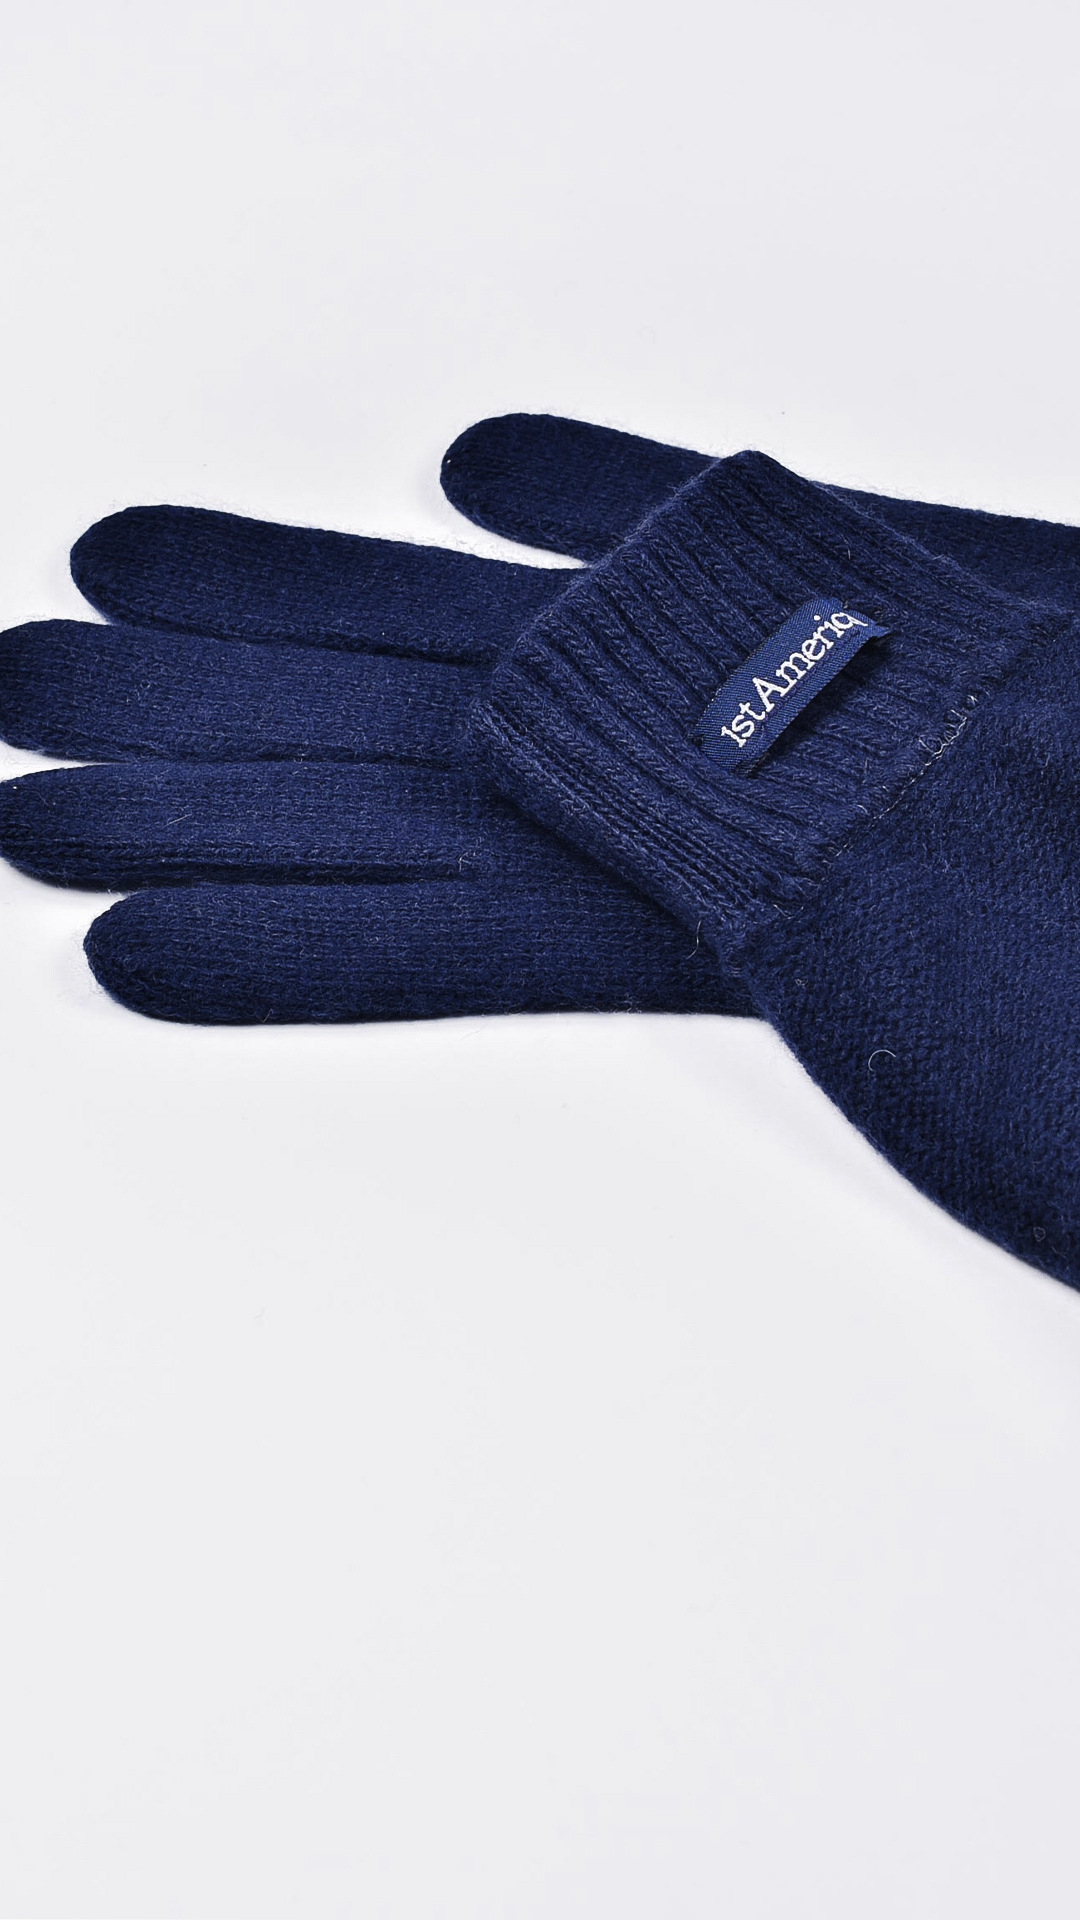 Glovesmixdario navy 3 1stAmerican guanti in lana e cashmere da uomo Made in Italy - caldi guanti invernali